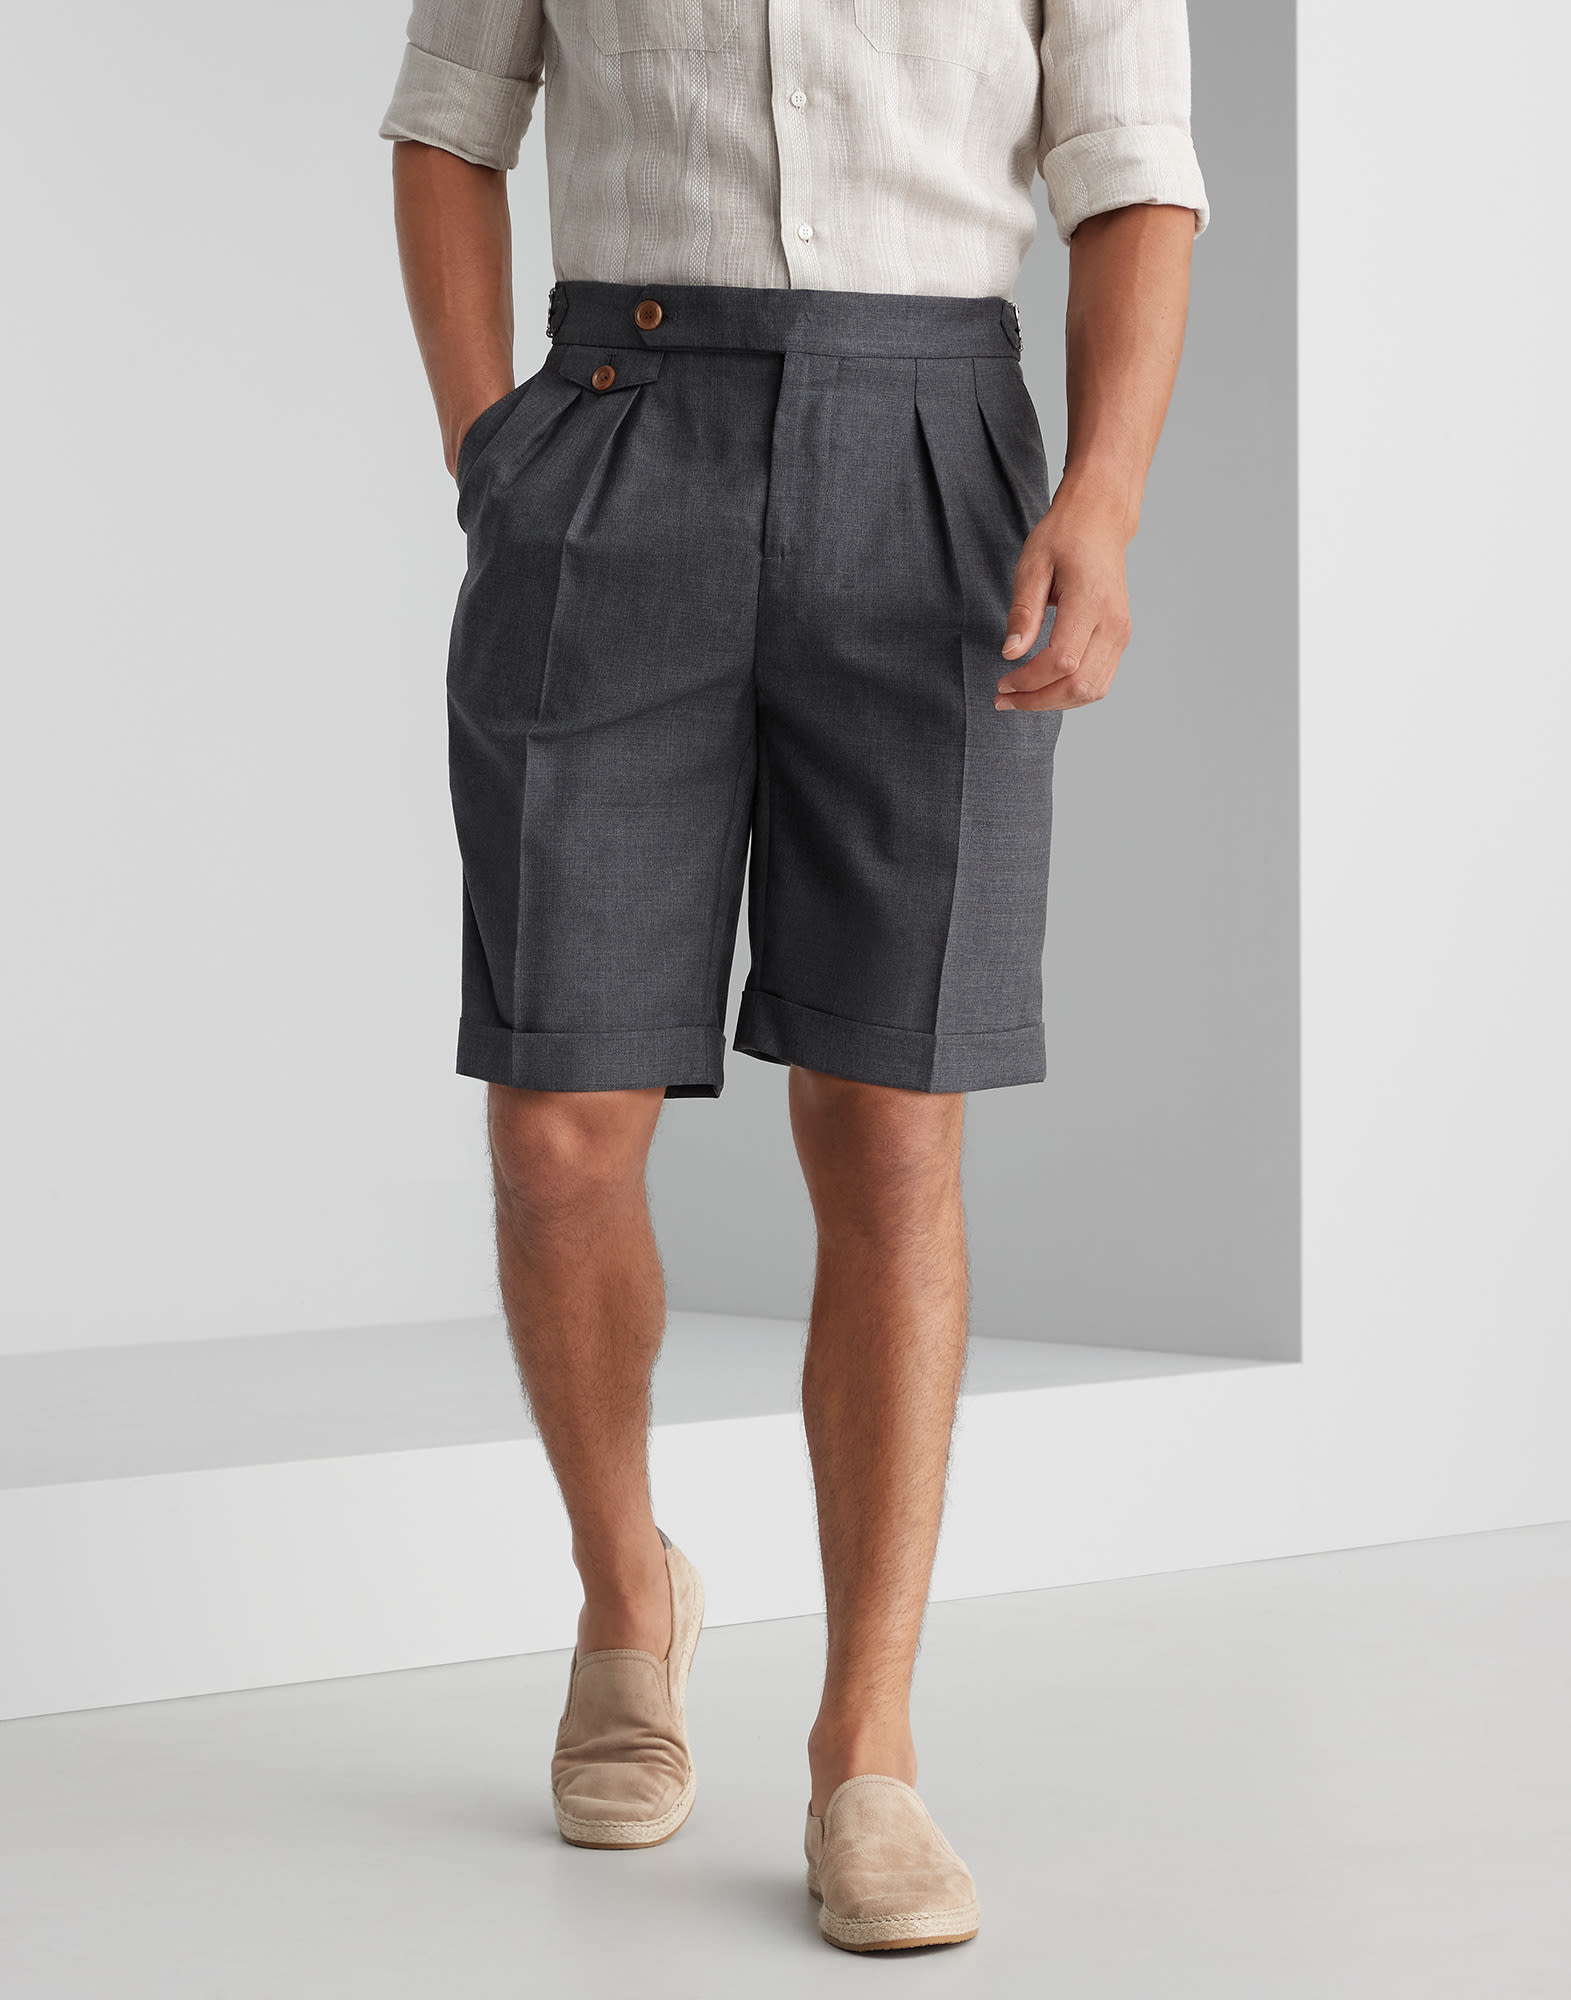 Bermuda shorts with pleats